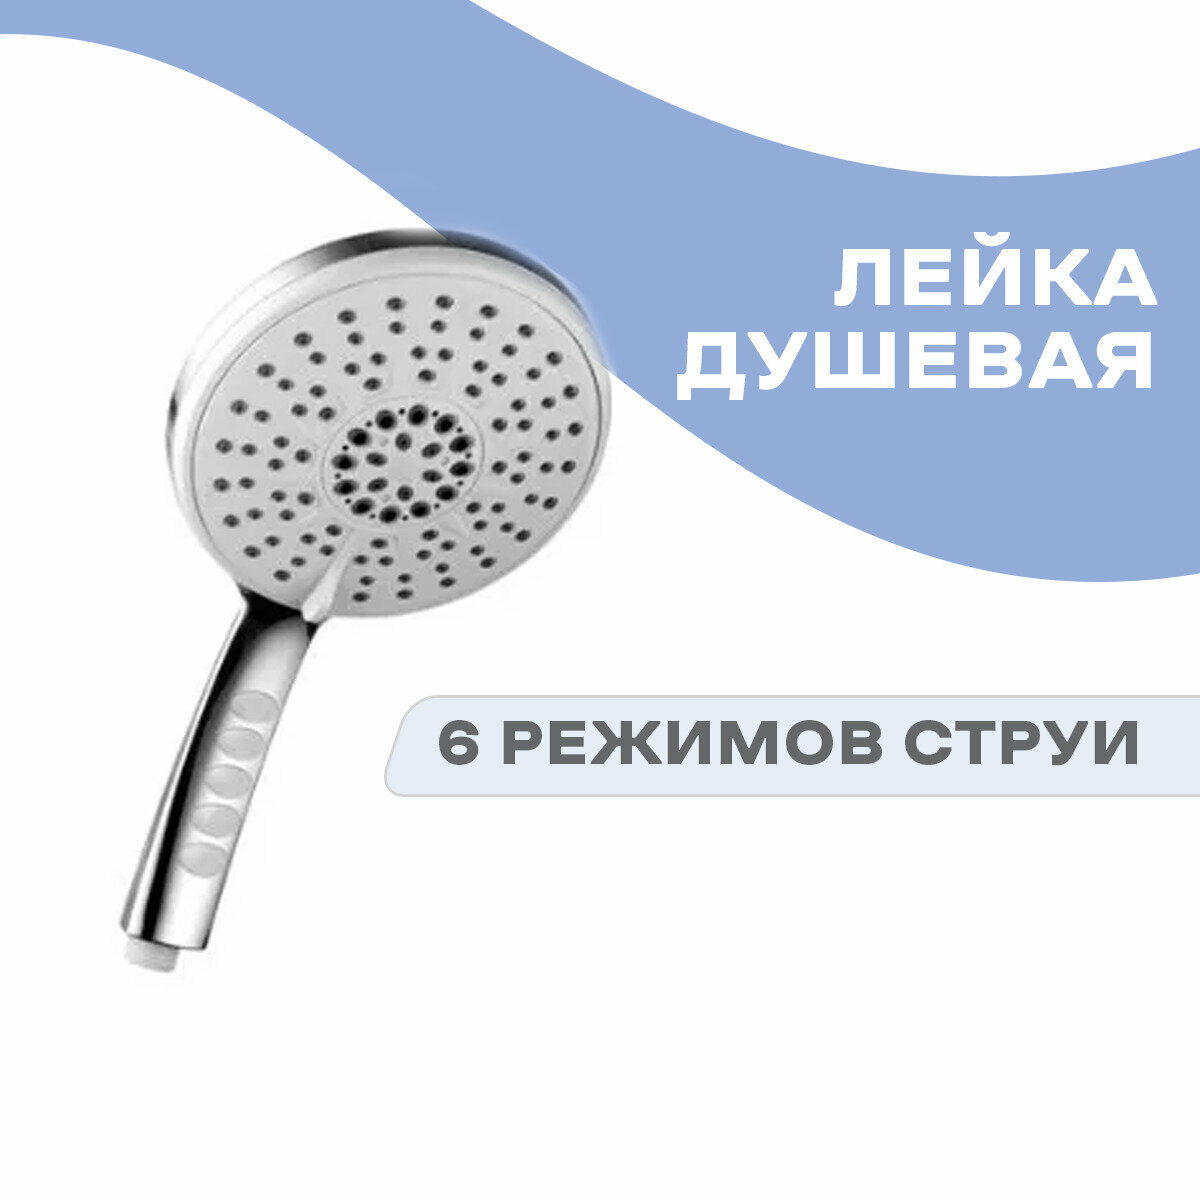 Ручной душ Lemark - фото №4